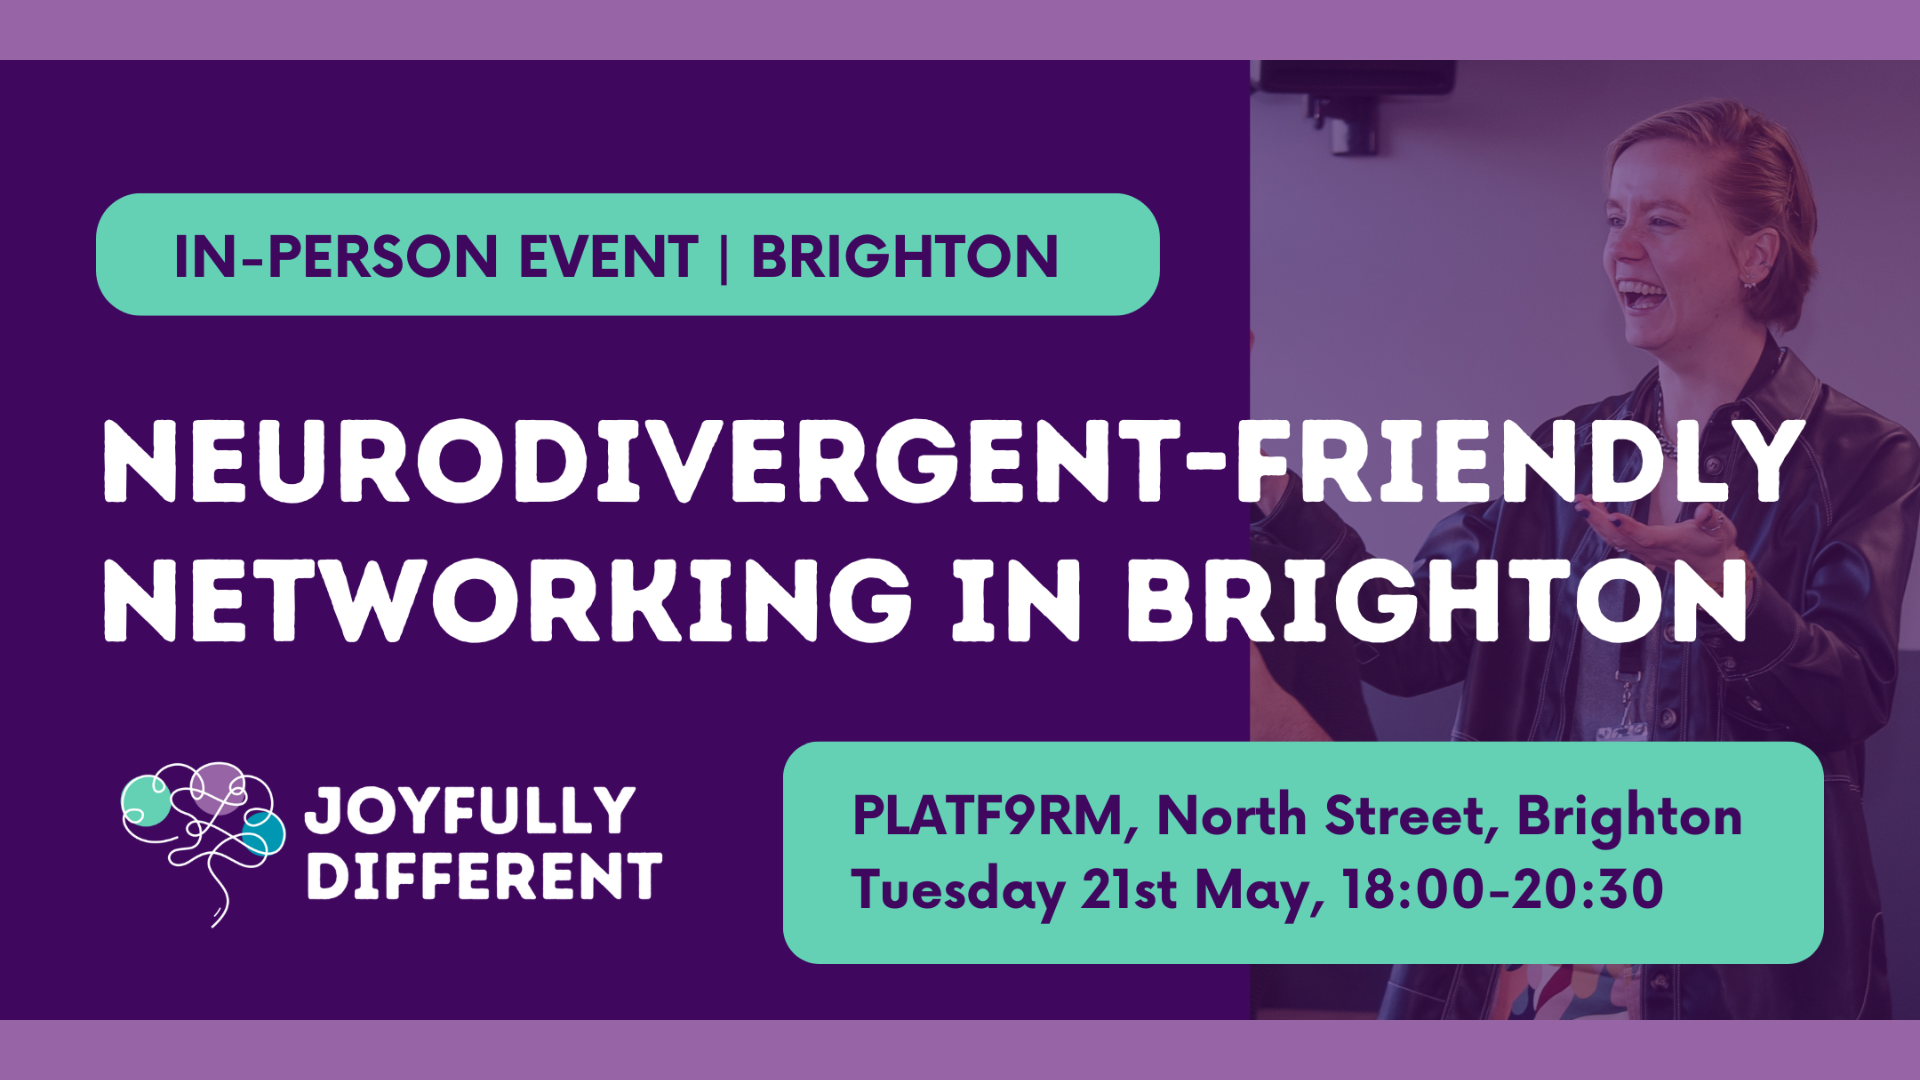 In-Person Neurodivergent-Friendly Networking in Brighton